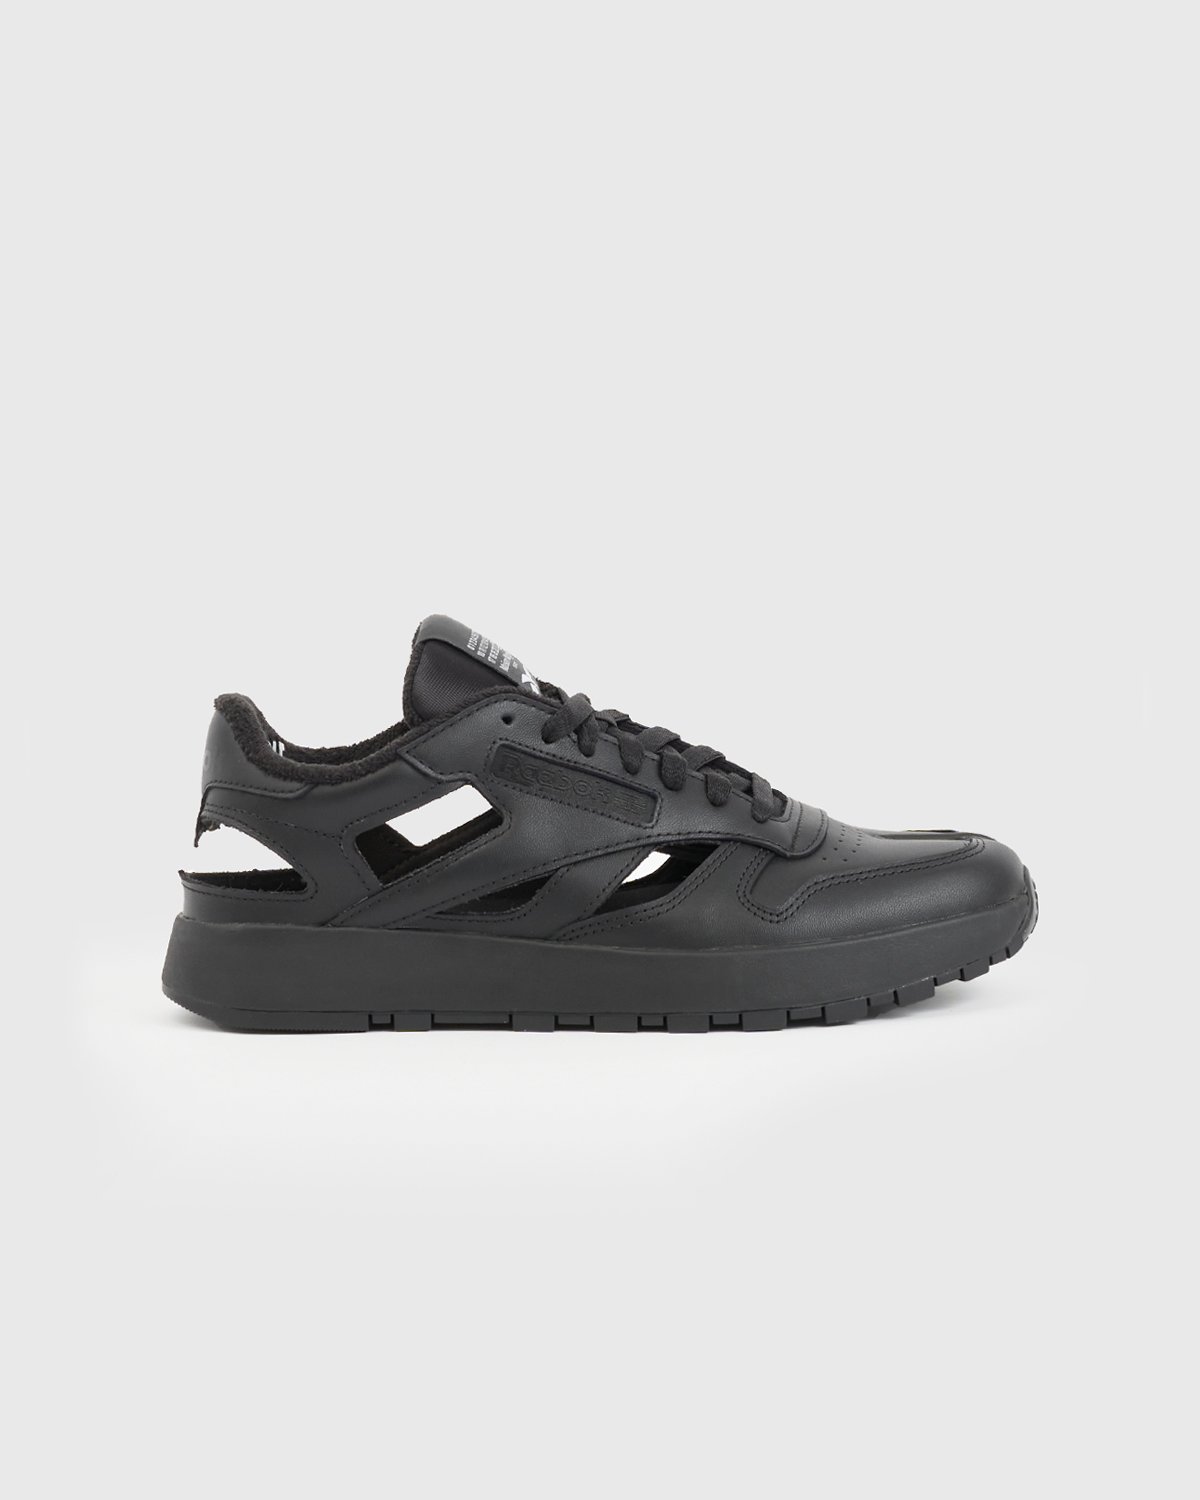 Maison Margiela x Reebok - Classic Leather Tabi Low Black - Footwear - Black - Image 1